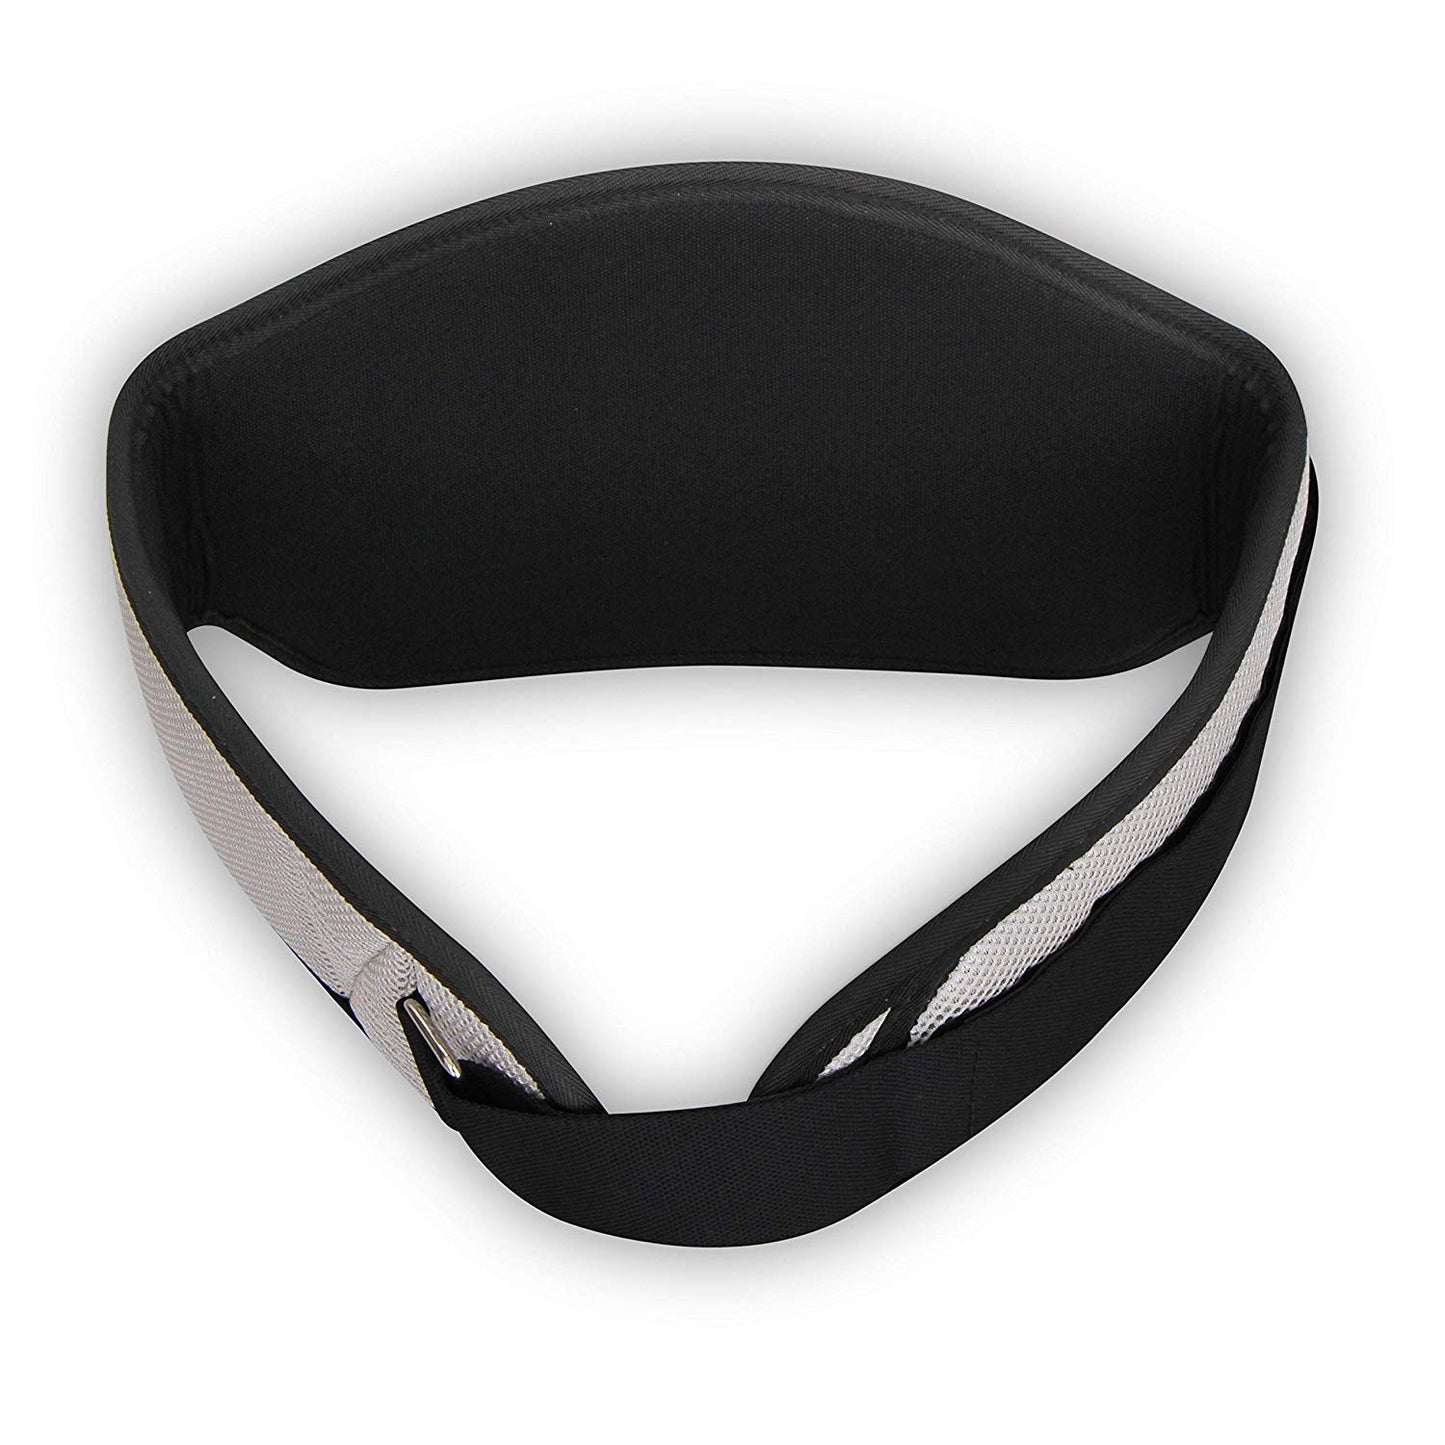 Nivia Supreme Weight Lifting Gym Belt (Freesize) - Best Price online Prokicksports.com